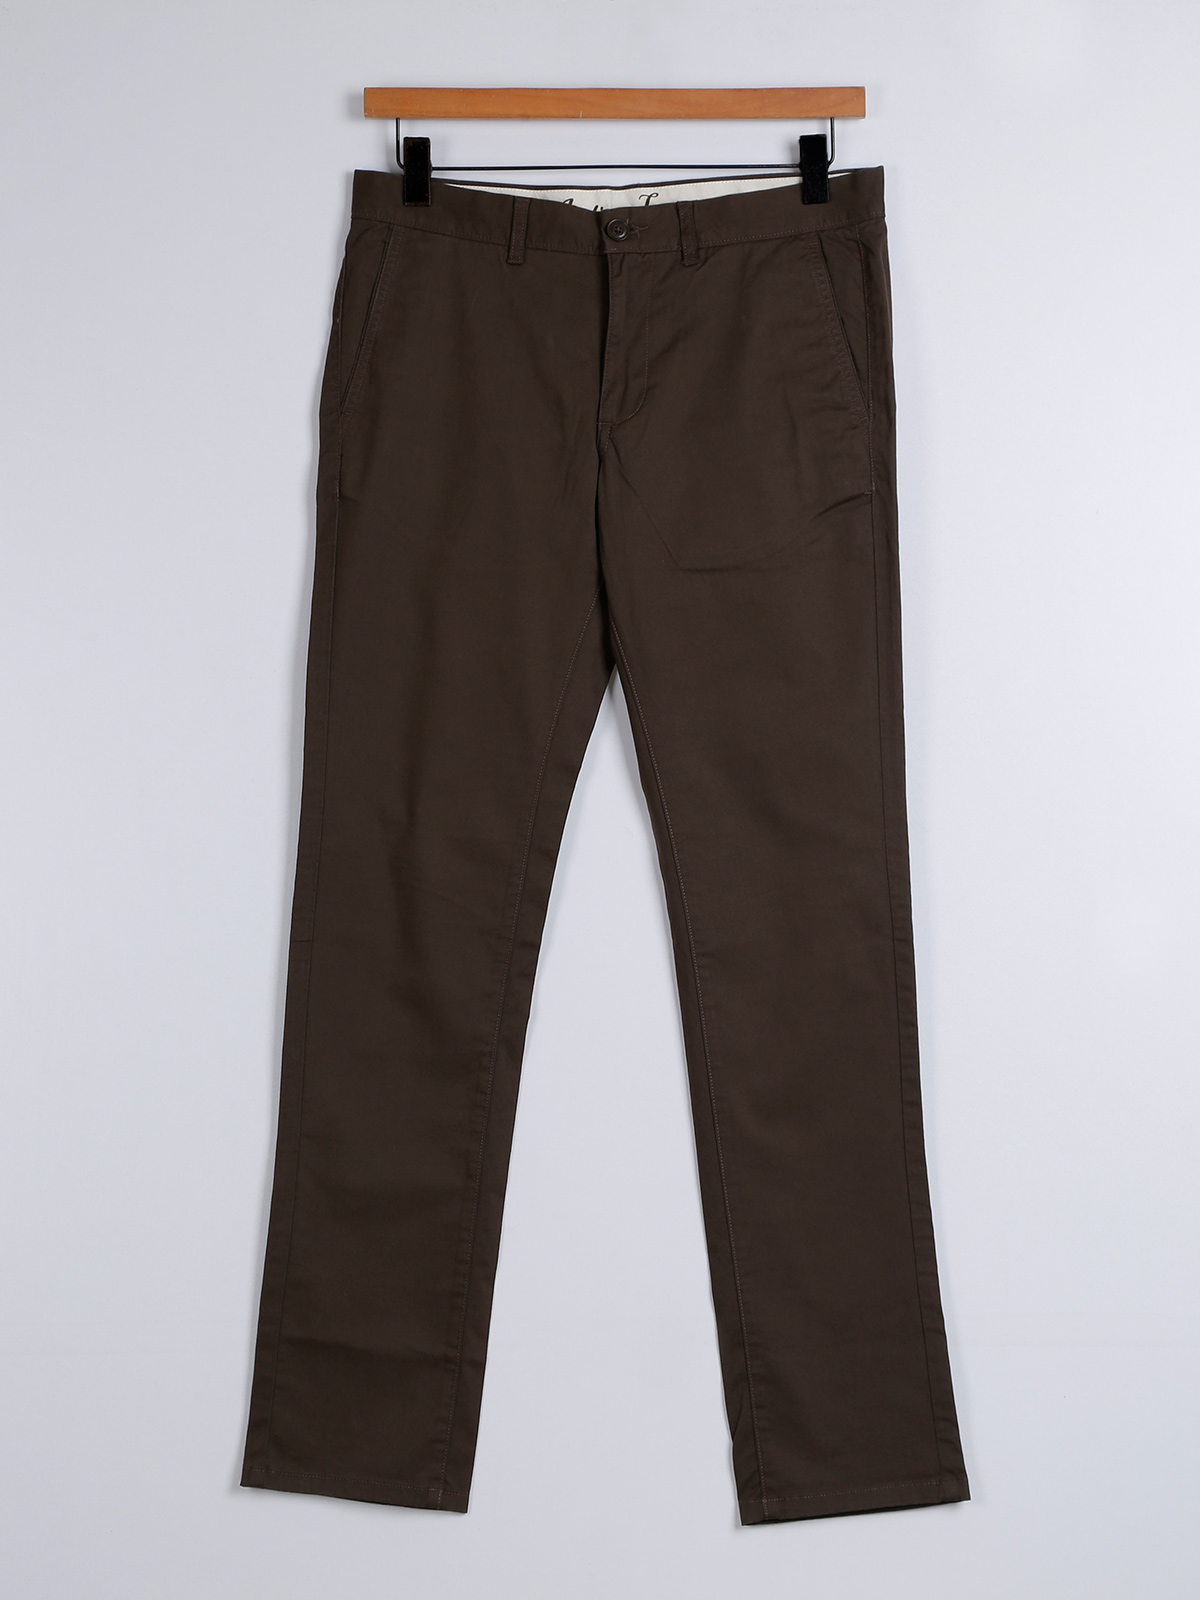 Cotton Men's Trouser at Rs 350/piece | सूती पतलून in Jaipur | ID:  12959907197